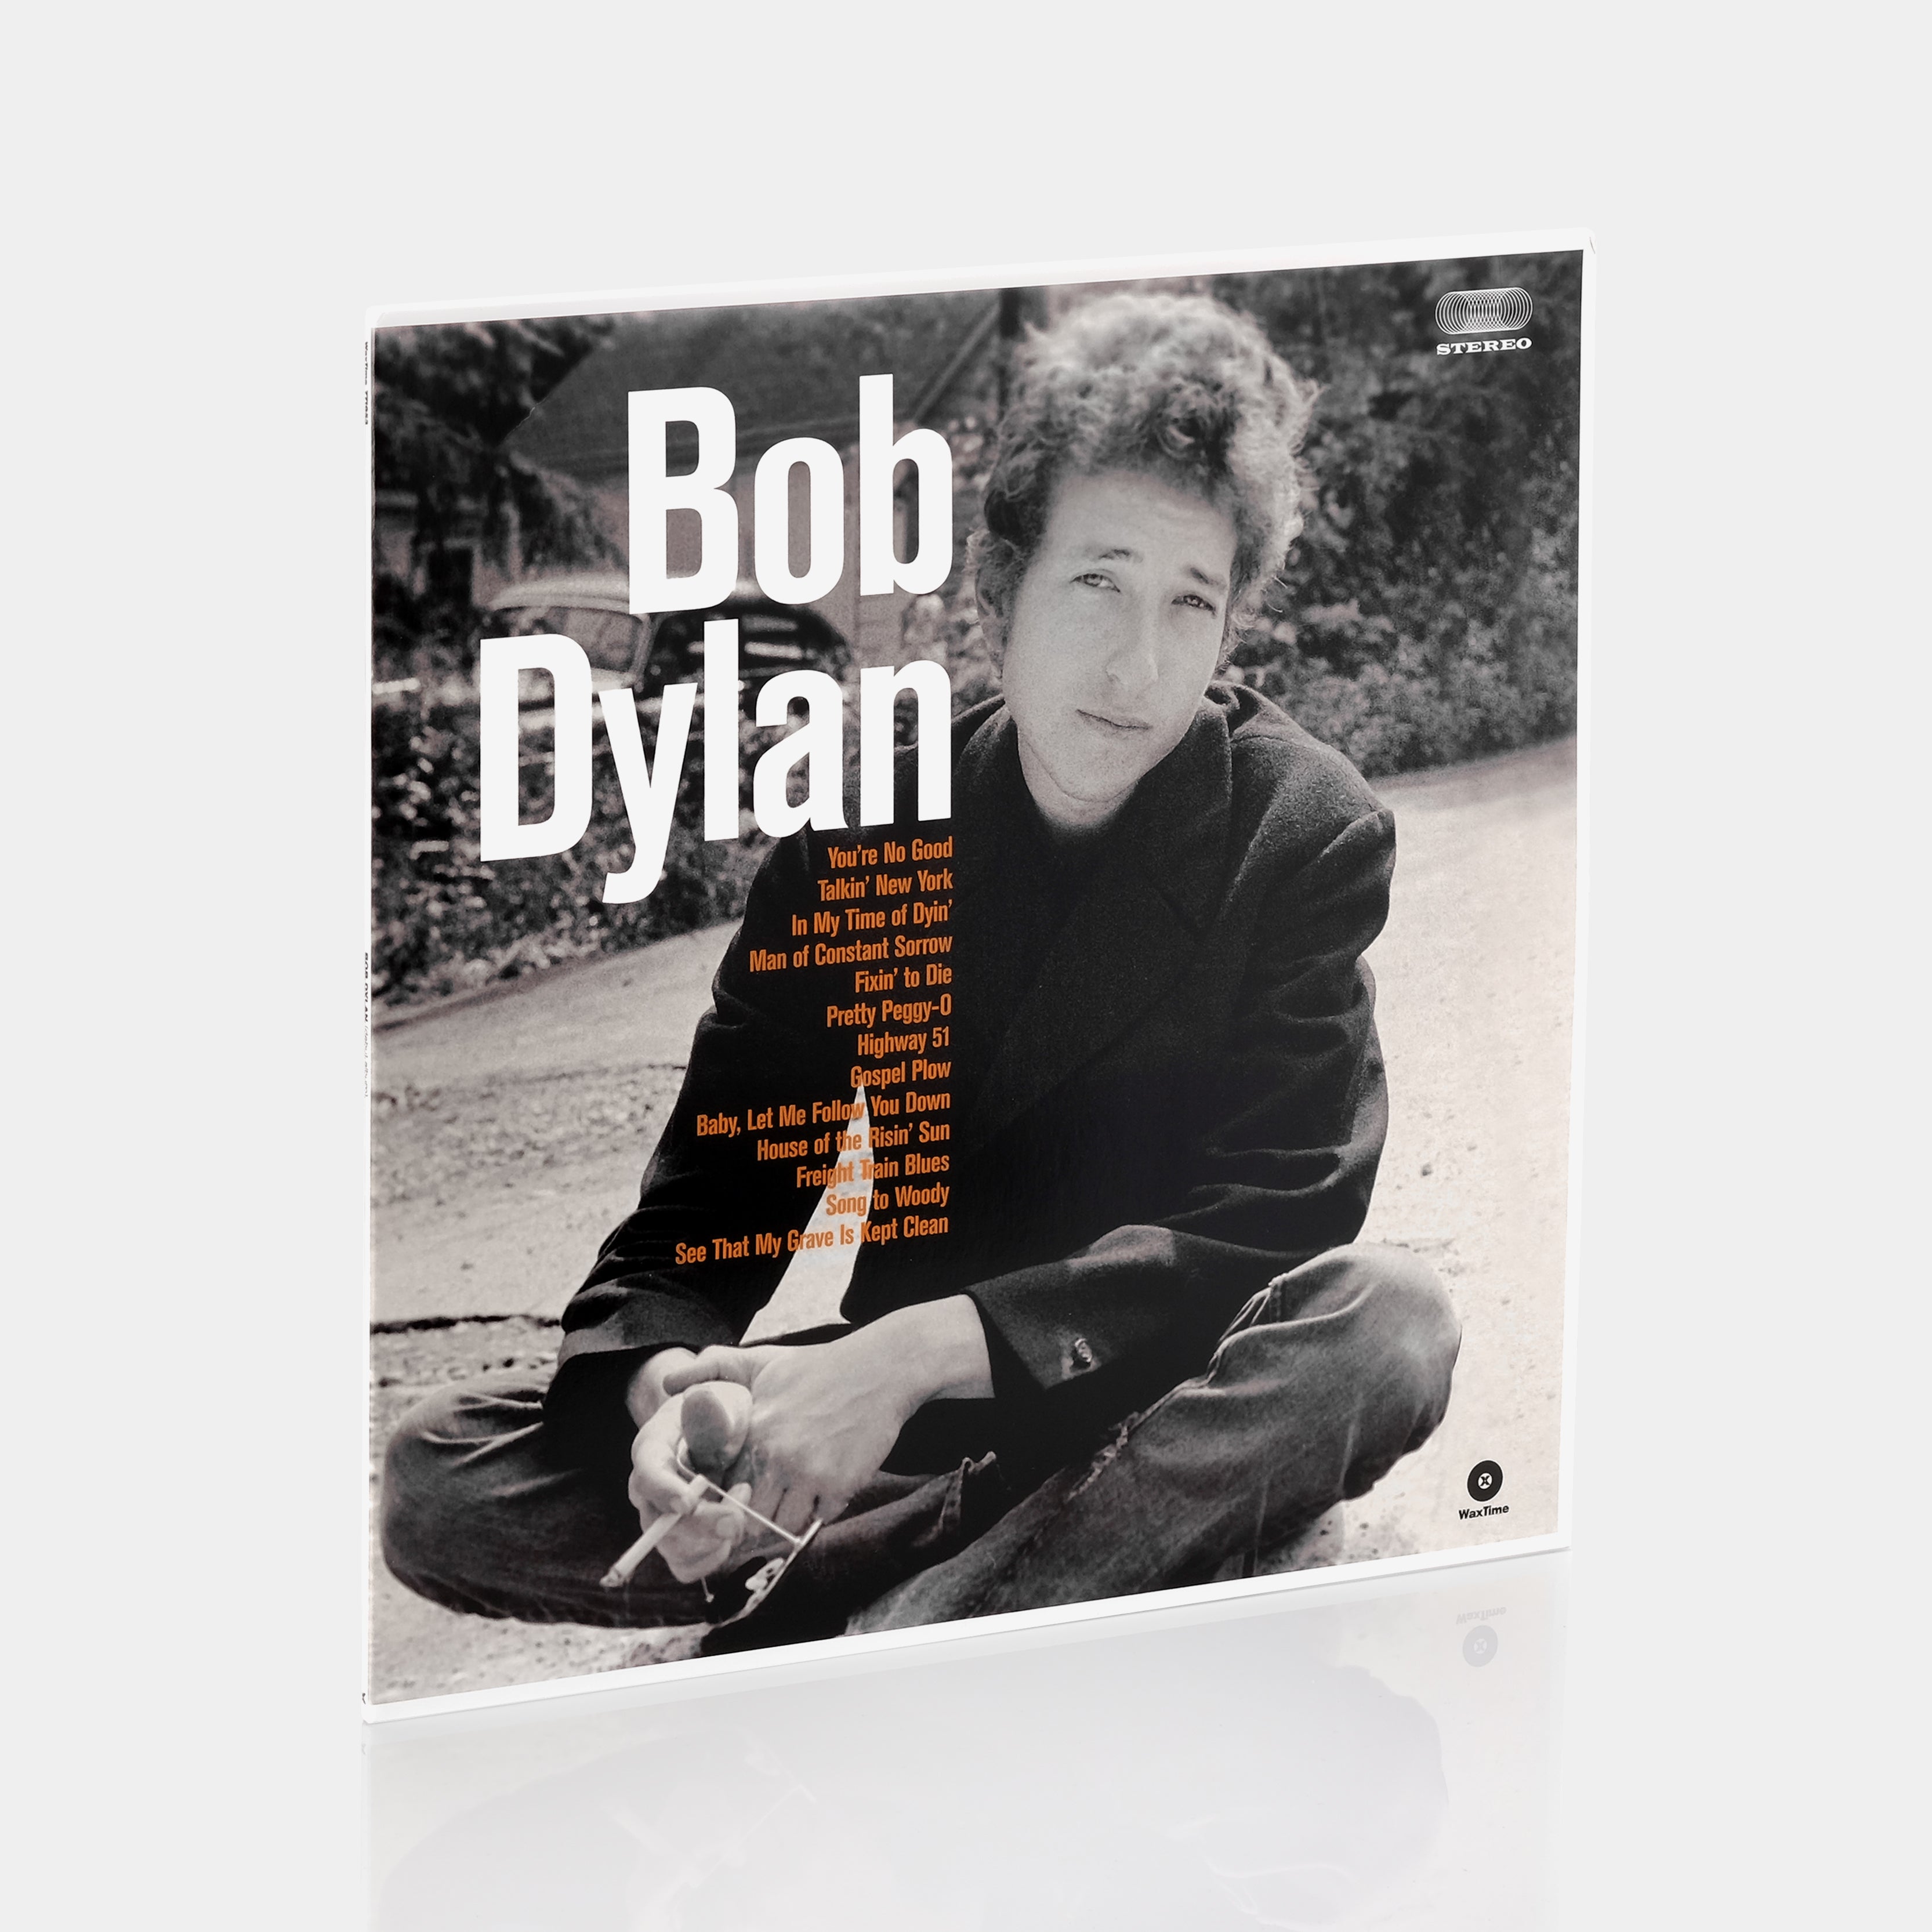 Bob Dylan - Bob Dylan LP Vinyl Record